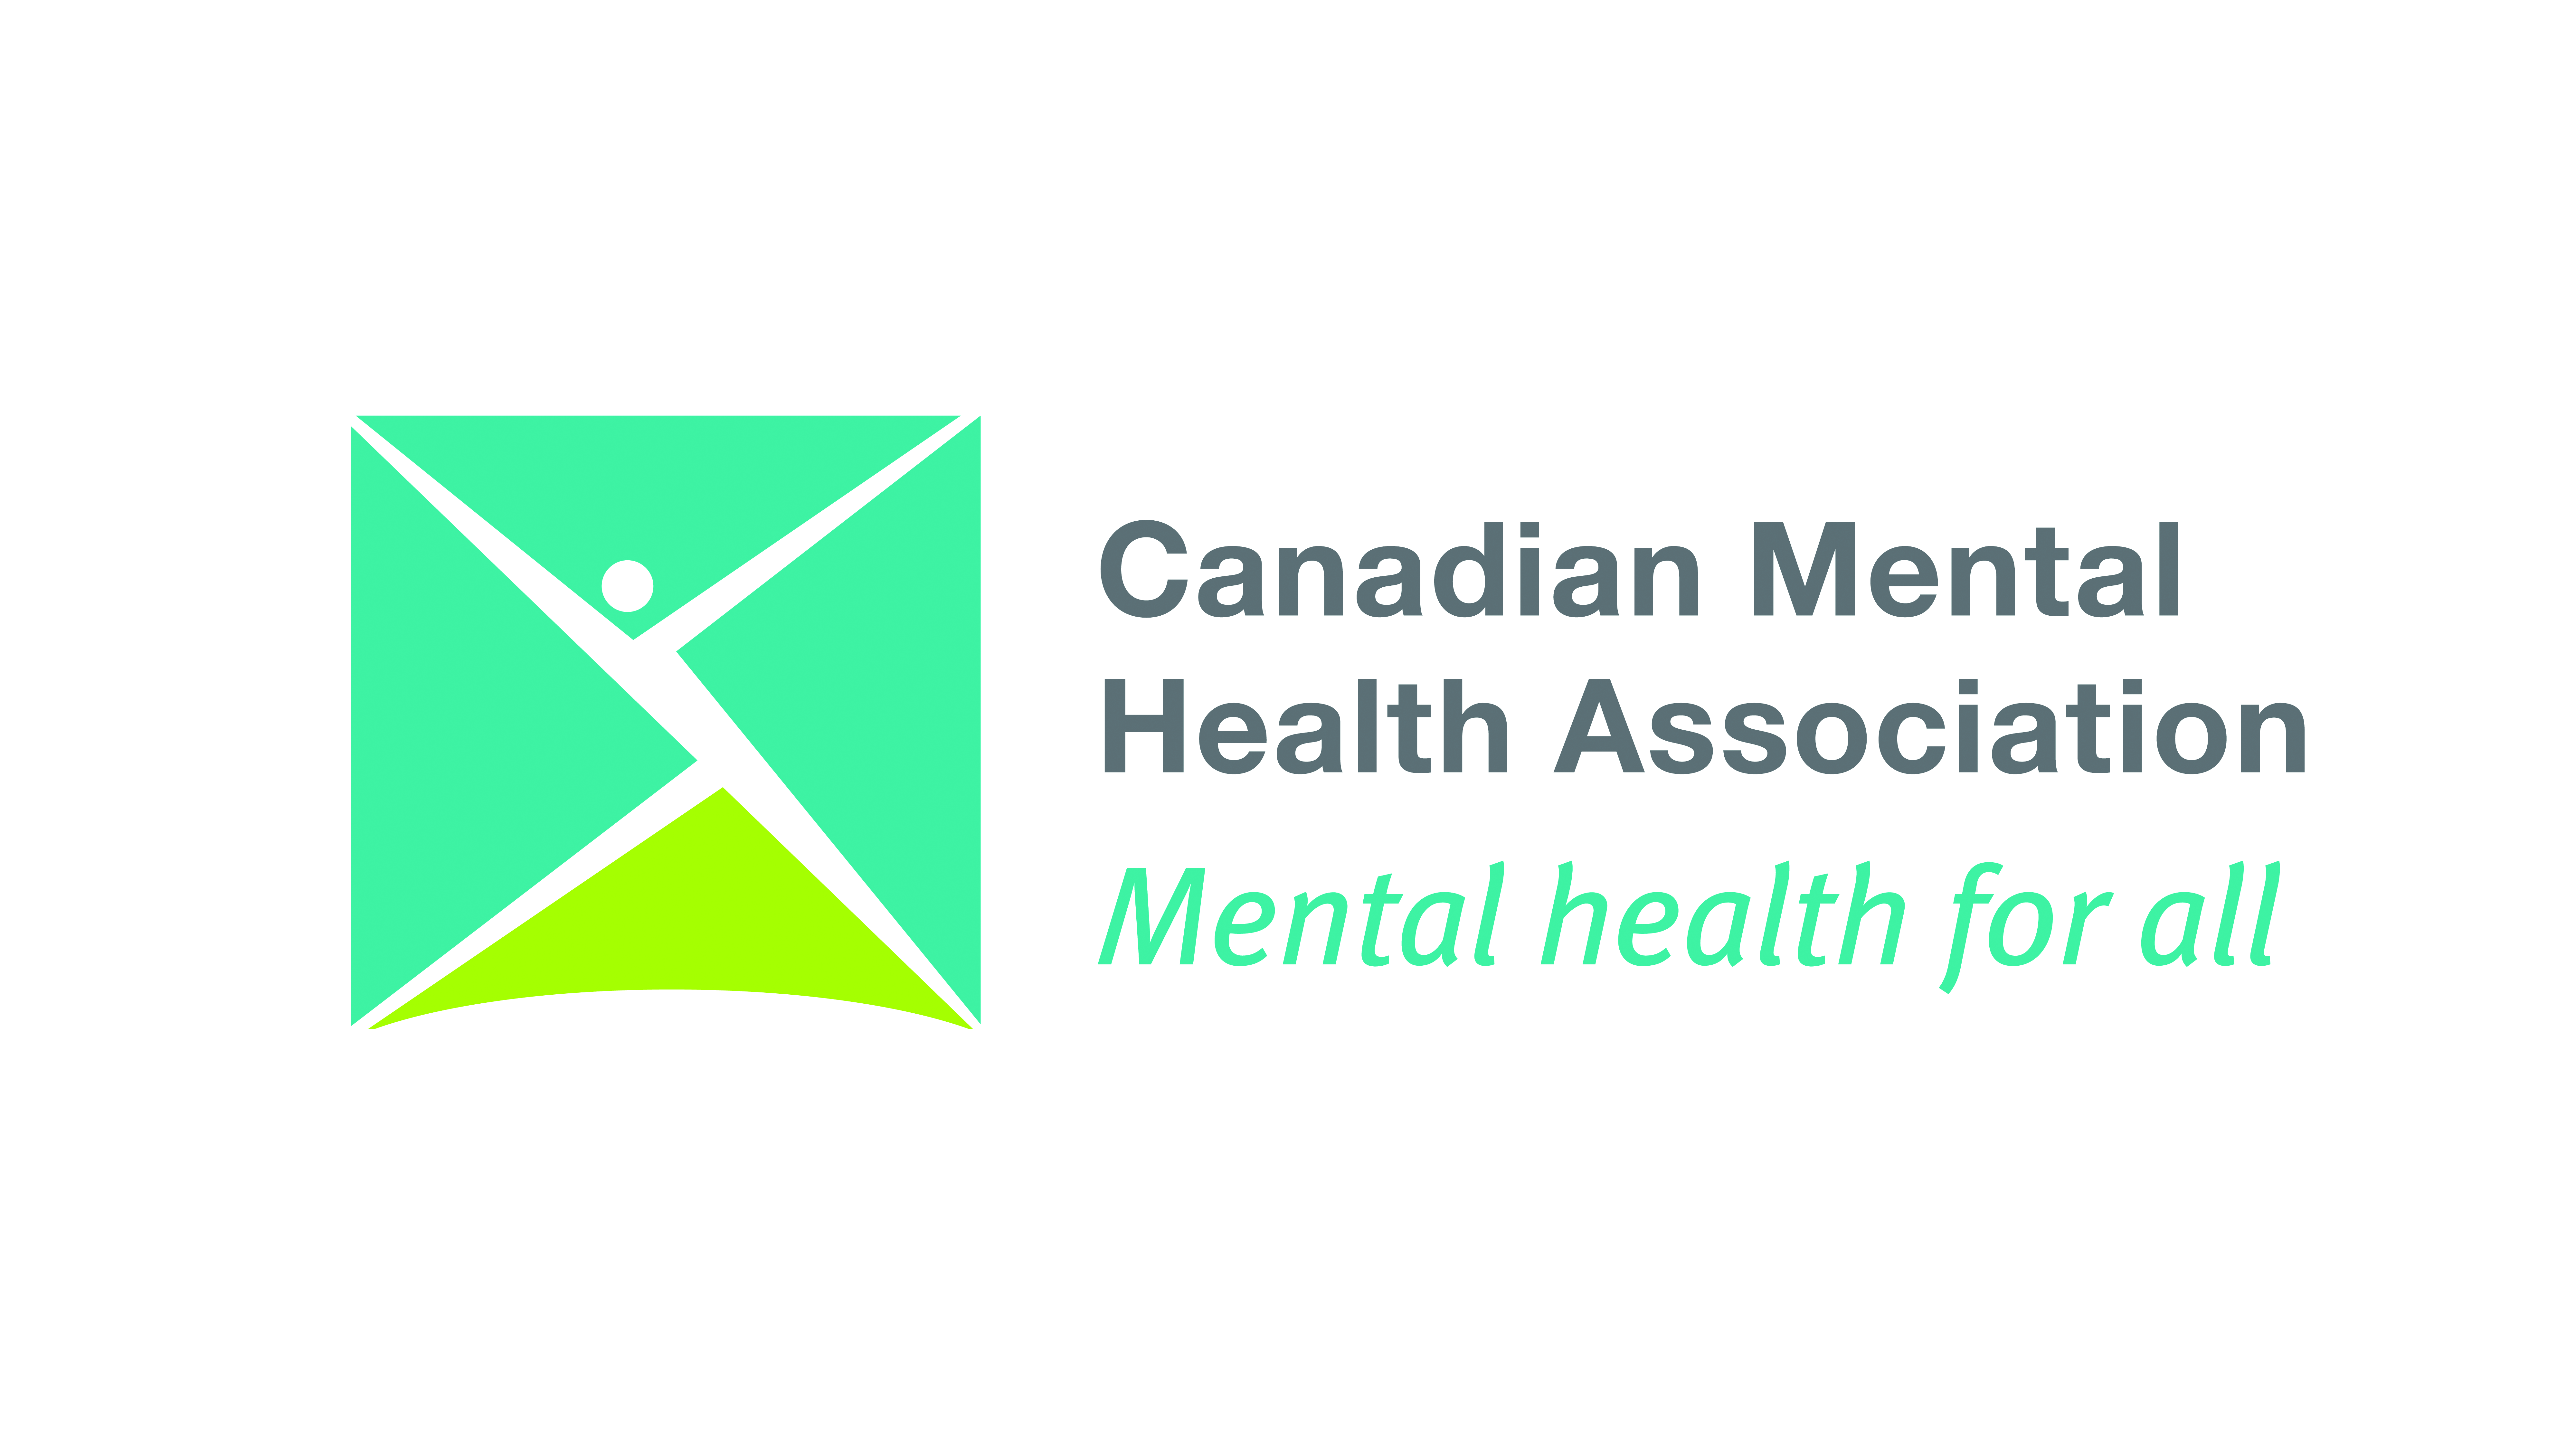 CANADIAN MENTAL HEALTH ASSOCIATION, NATIONAL